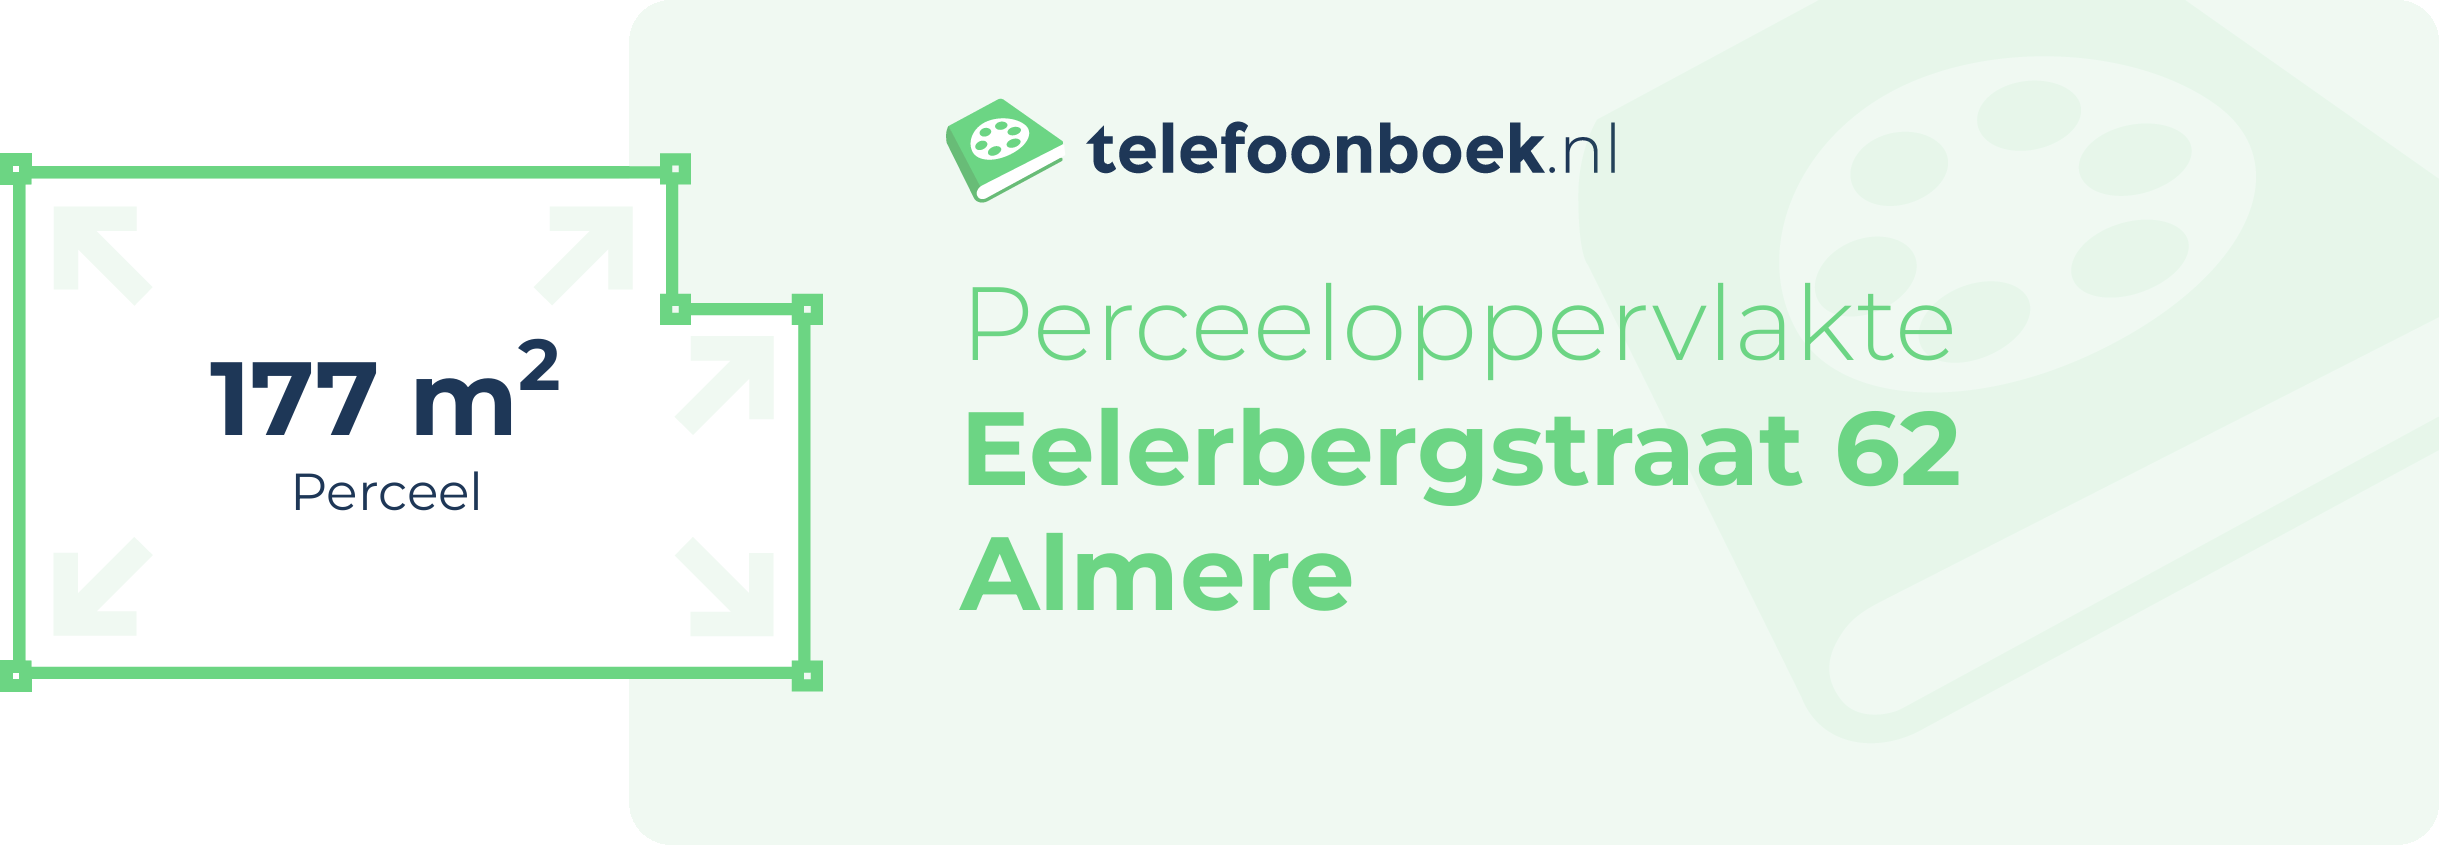 Perceeloppervlakte Eelerbergstraat 62 Almere